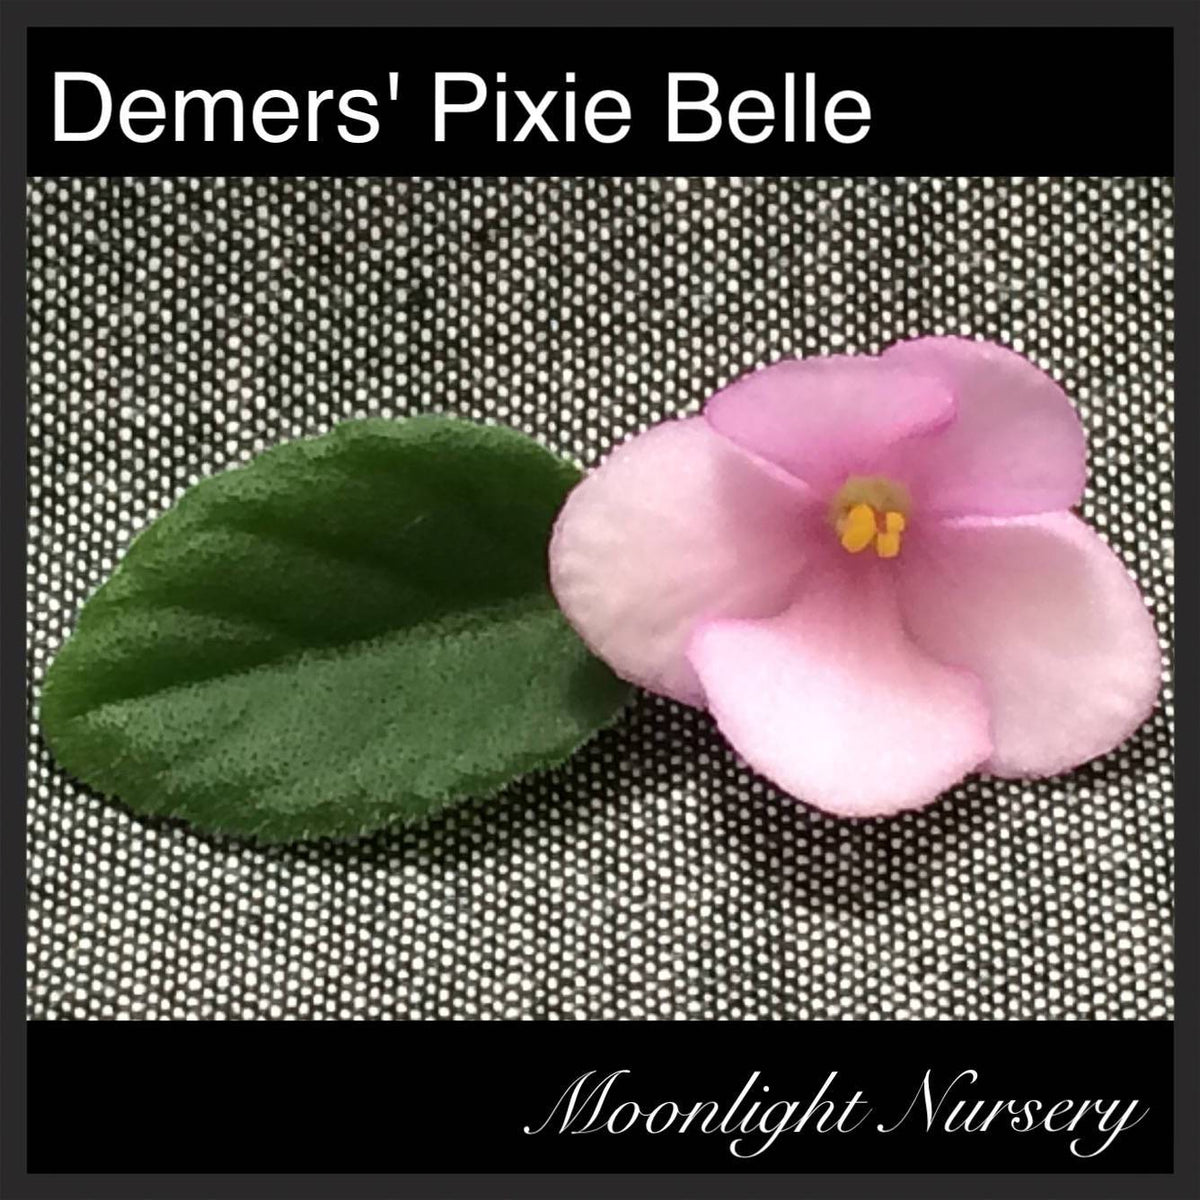 Demers Pixie Belle Moonlight Nursery 